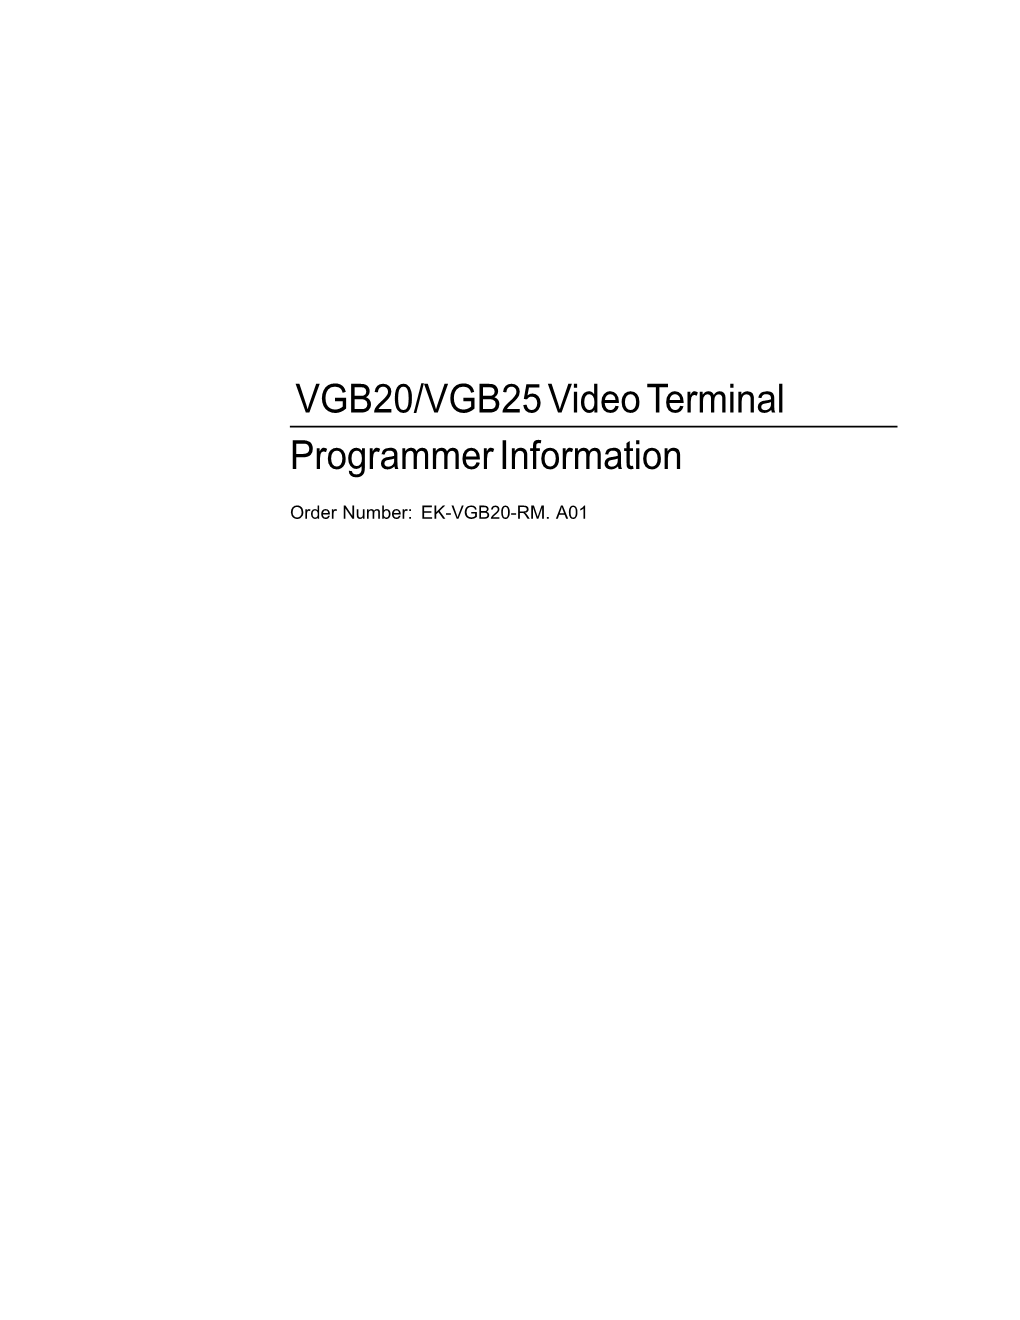 VGB20/VGB25 Video Terminal Programmer Information